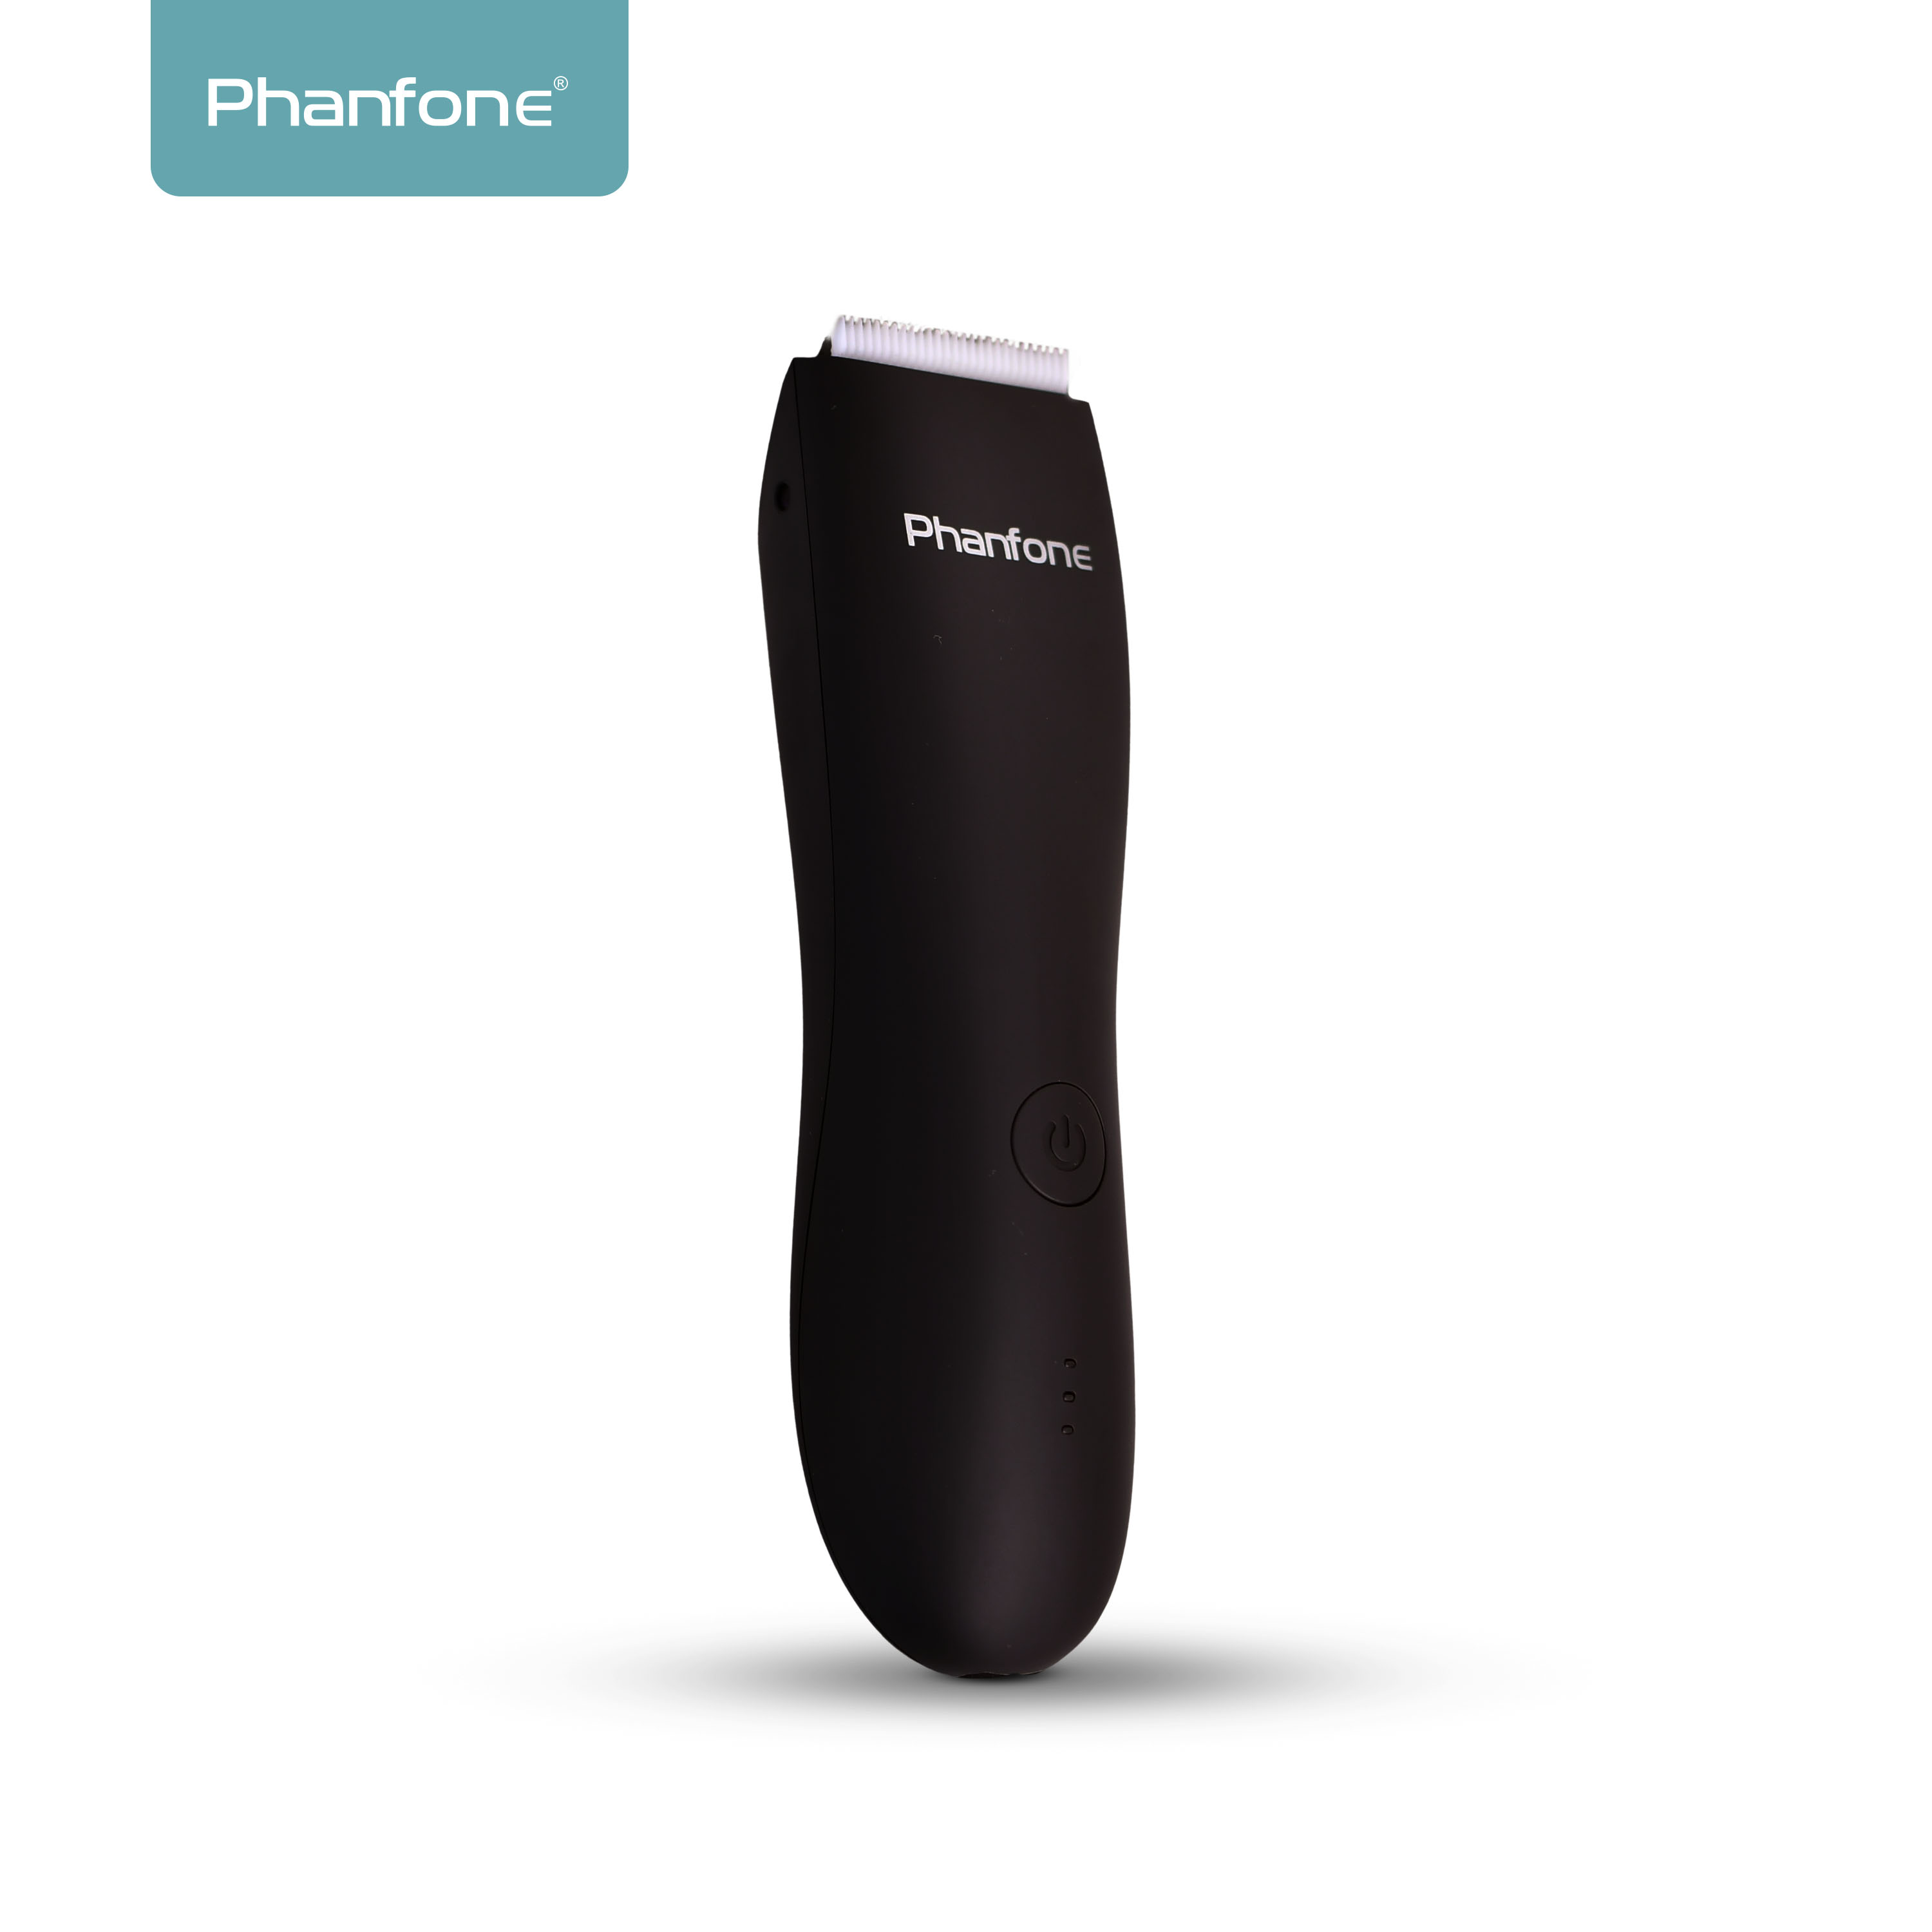 Phanfone | Product